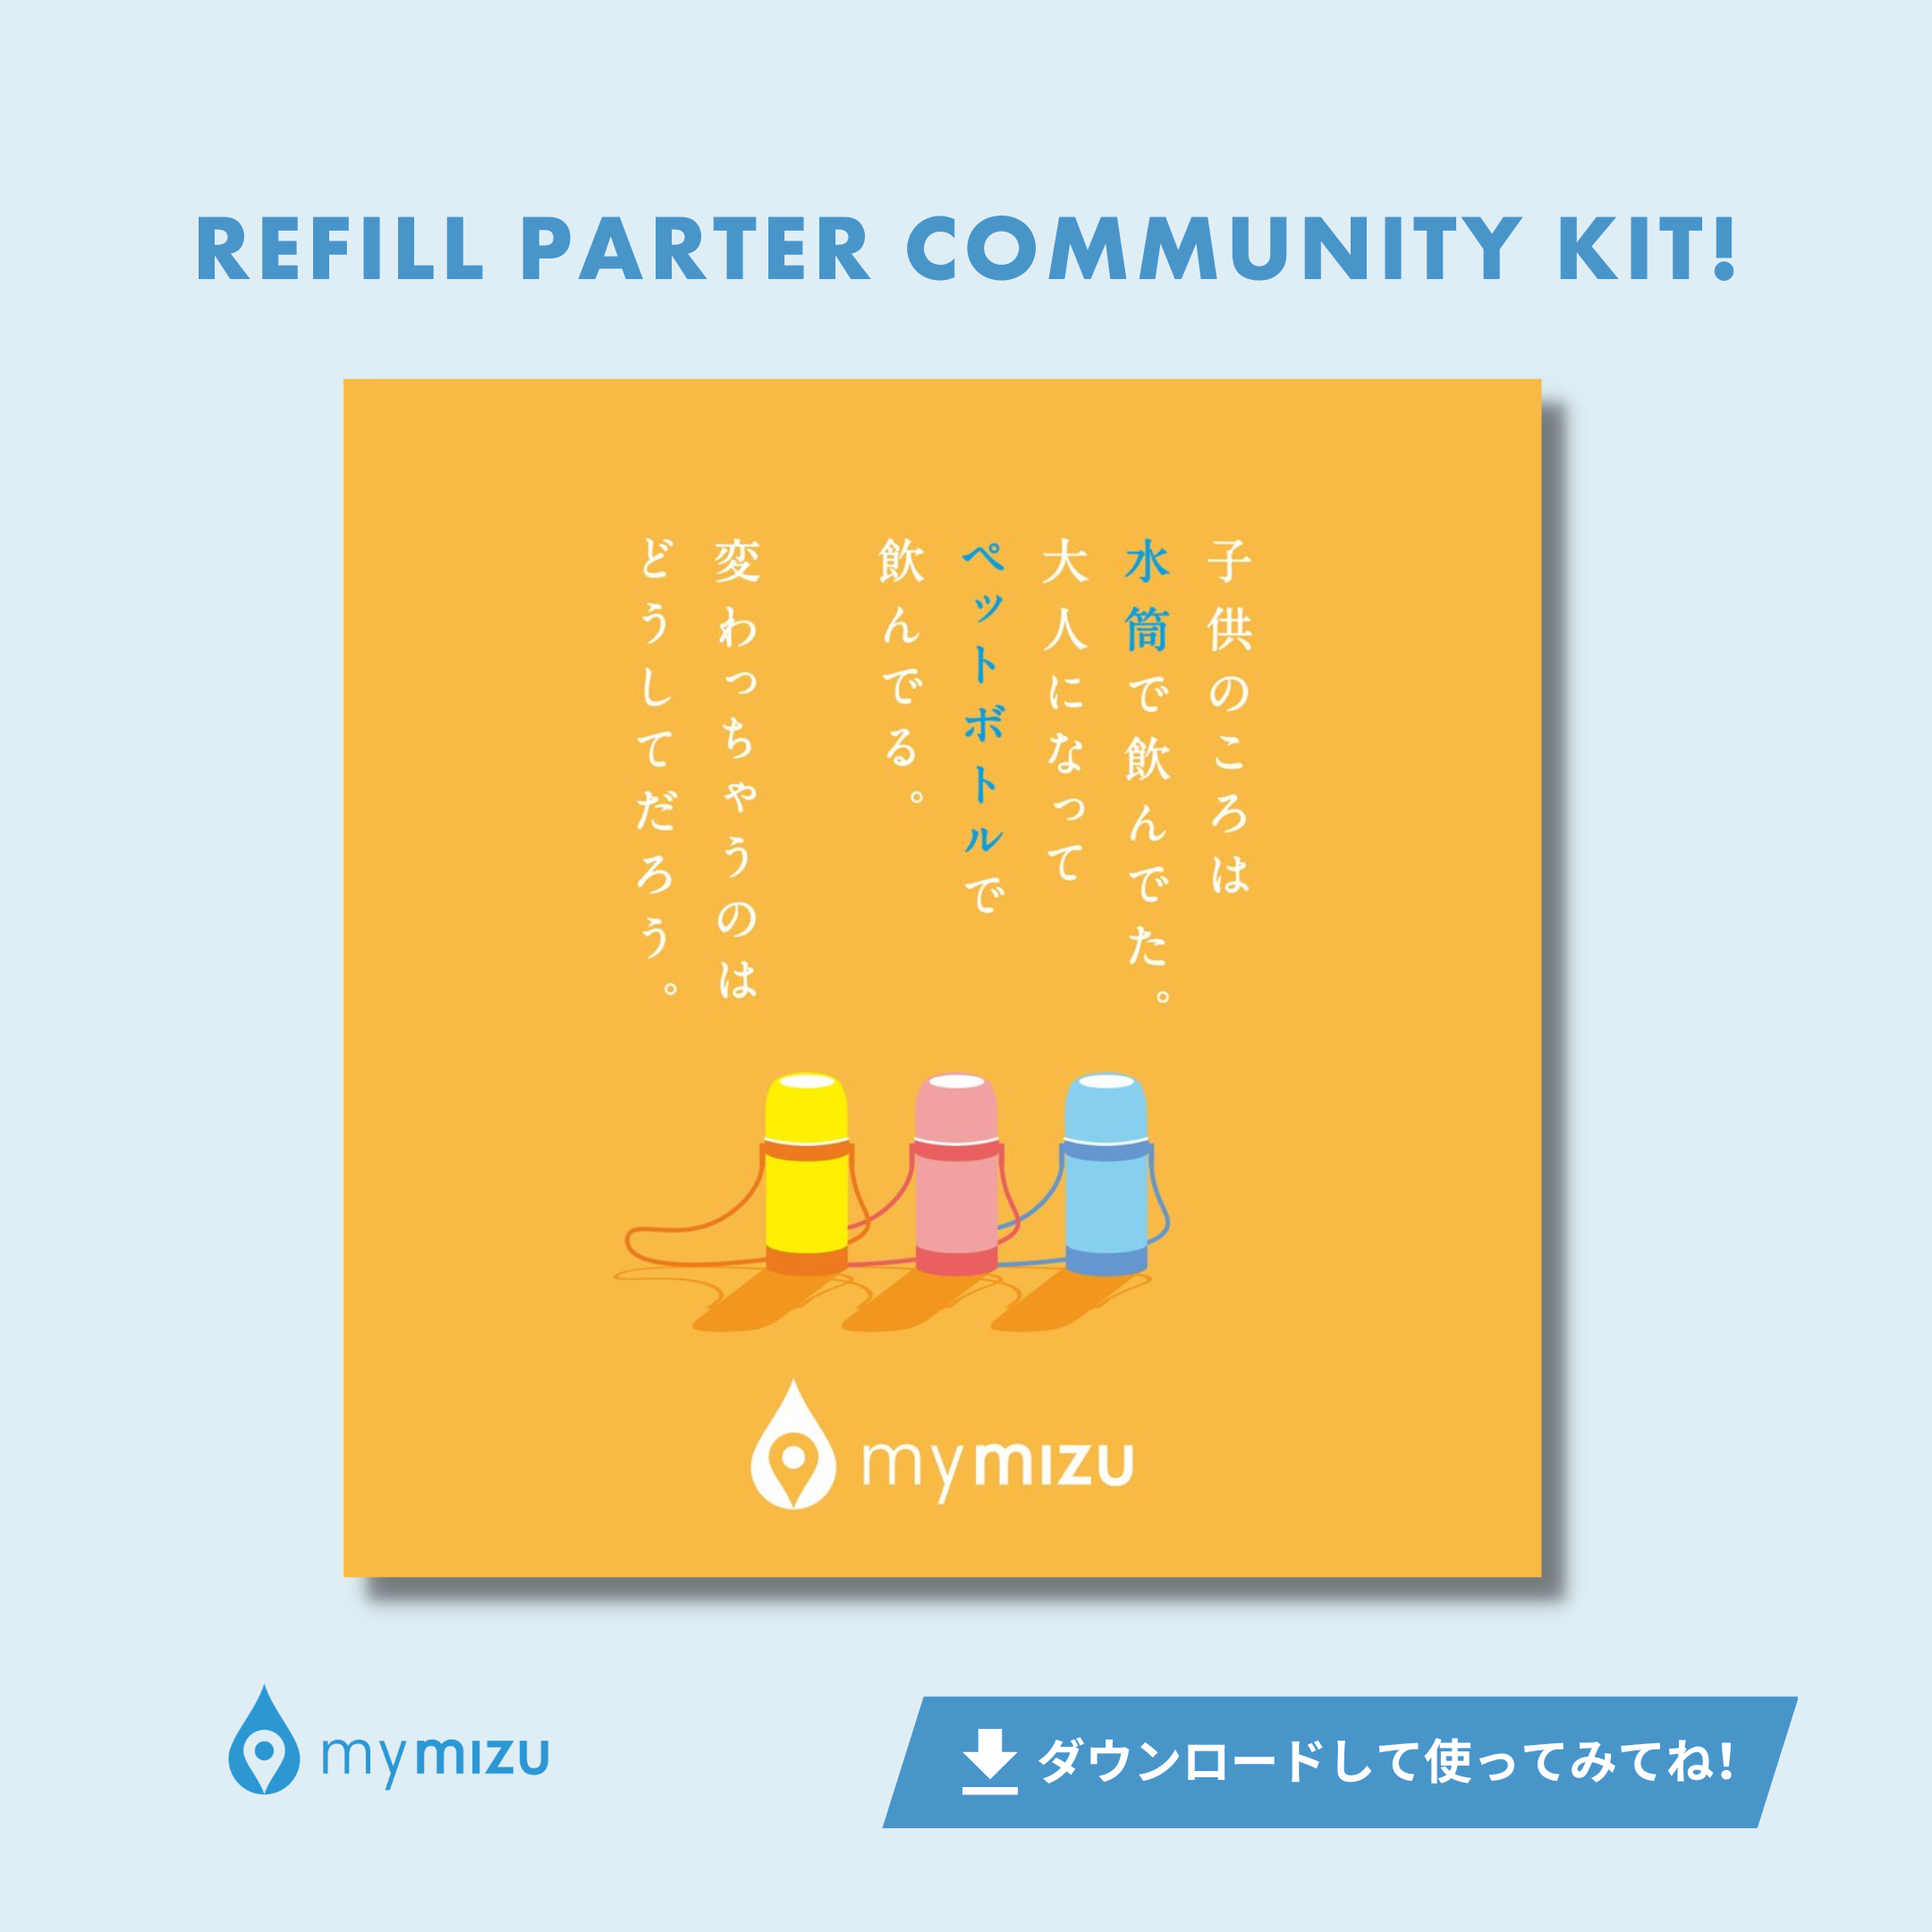 mymizu refill parter community kit_2.png